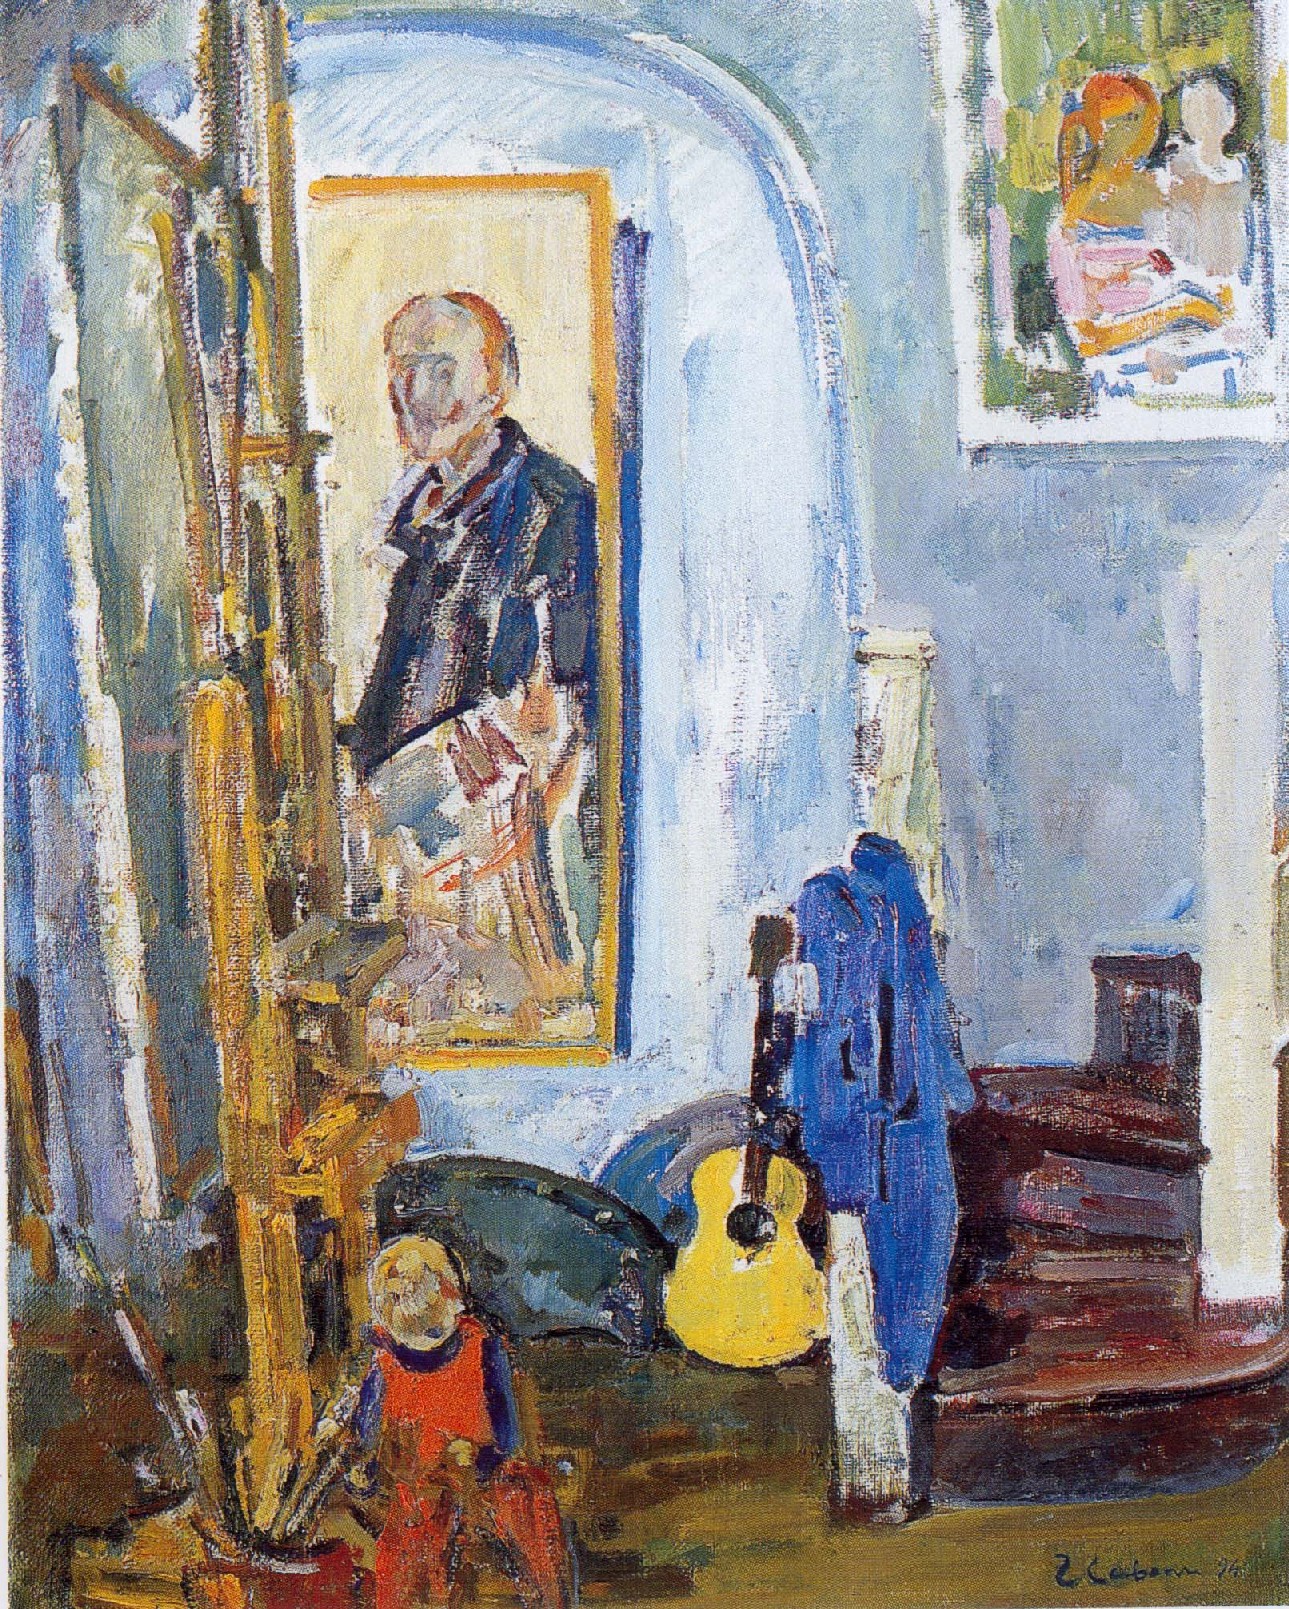 Gleb Savinov, pittura russa, post-impressionisti russi, interno